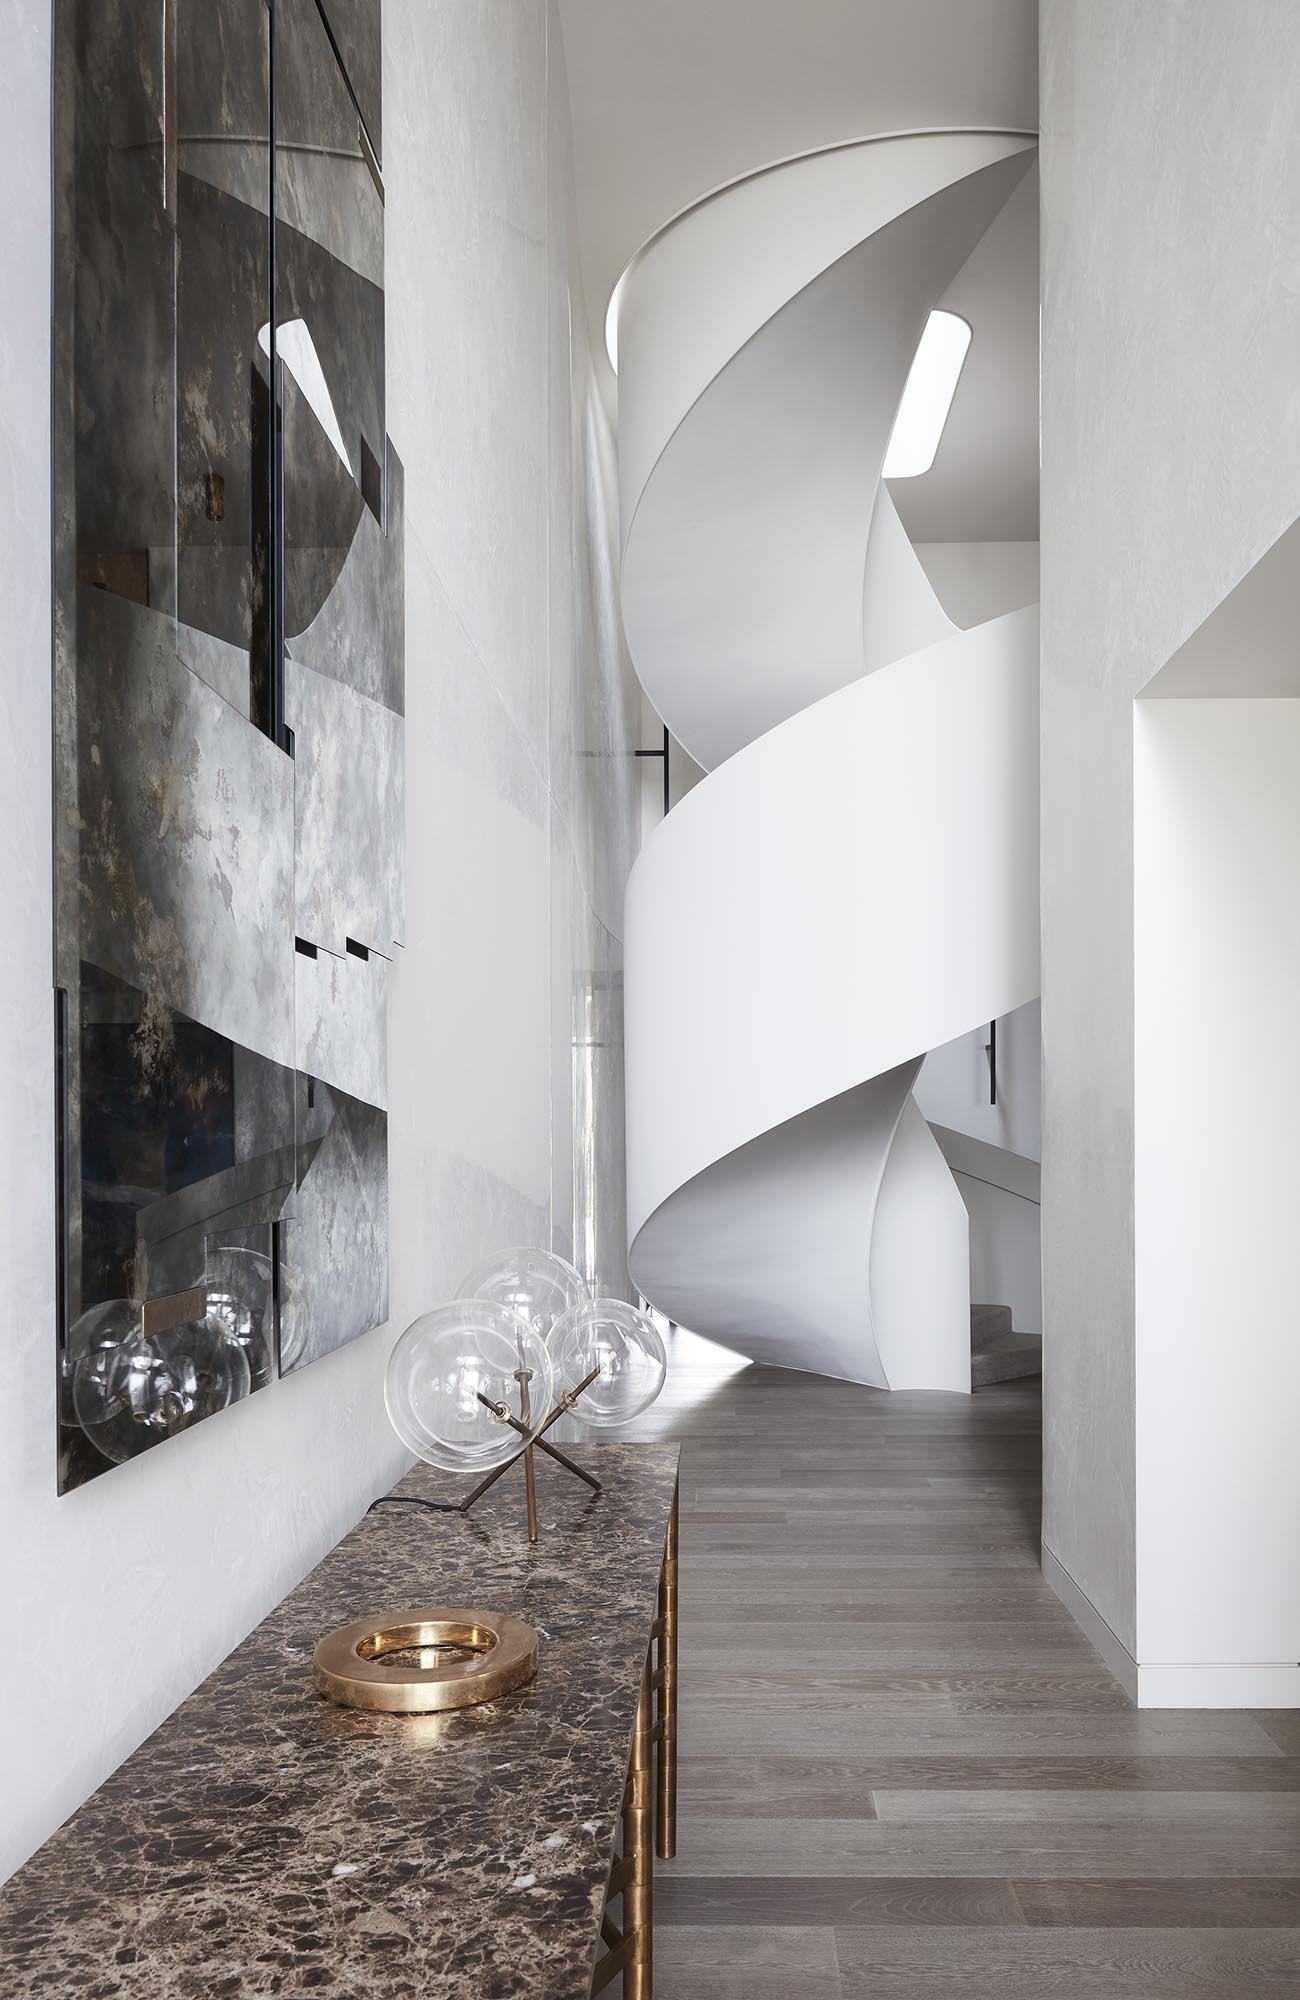 White spiral stairs in a modern interior.